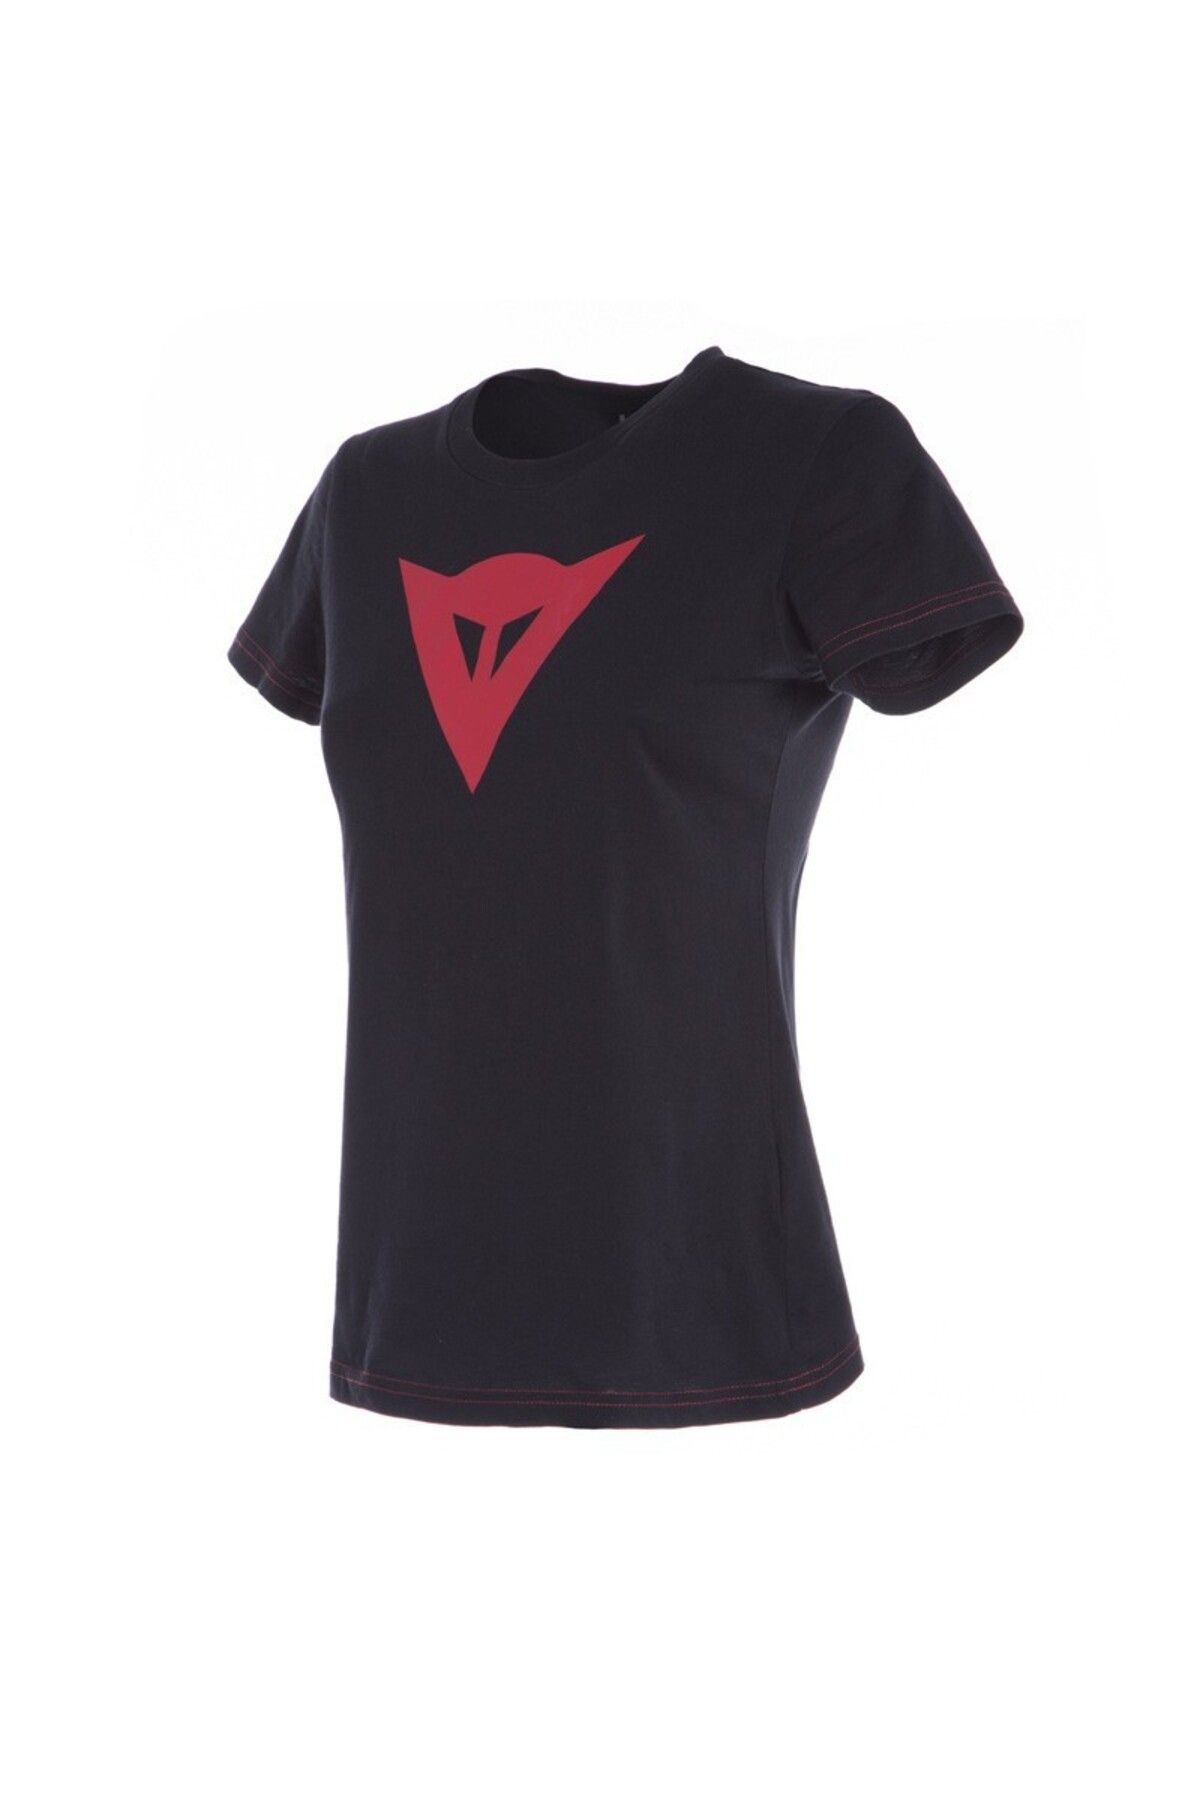 Dainese Speed Demon Kadın Siyah T-shirt